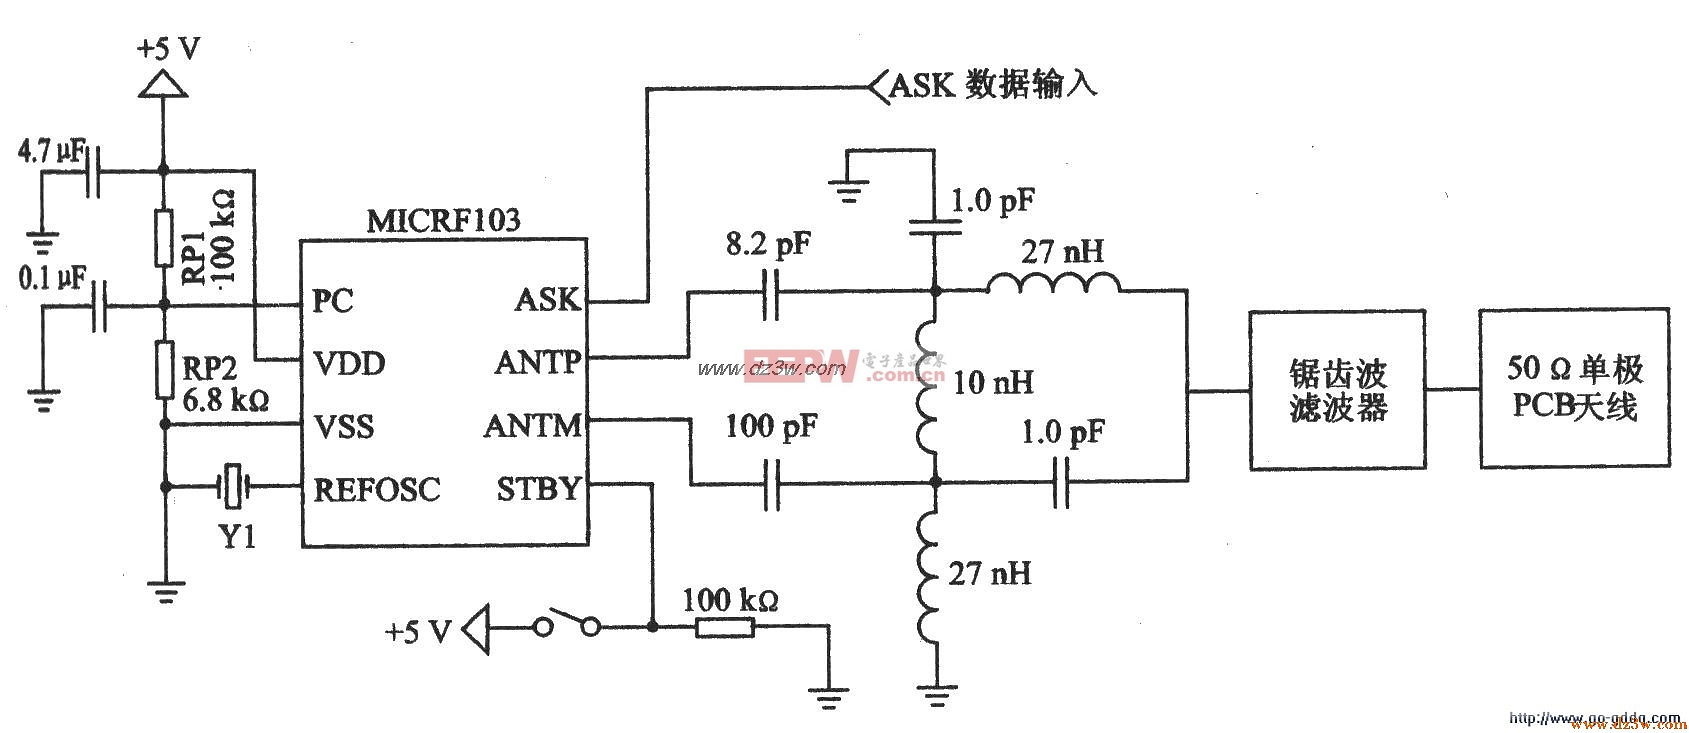 l GHz～800MHz ASK发射器MICRFl03特点及应用电路